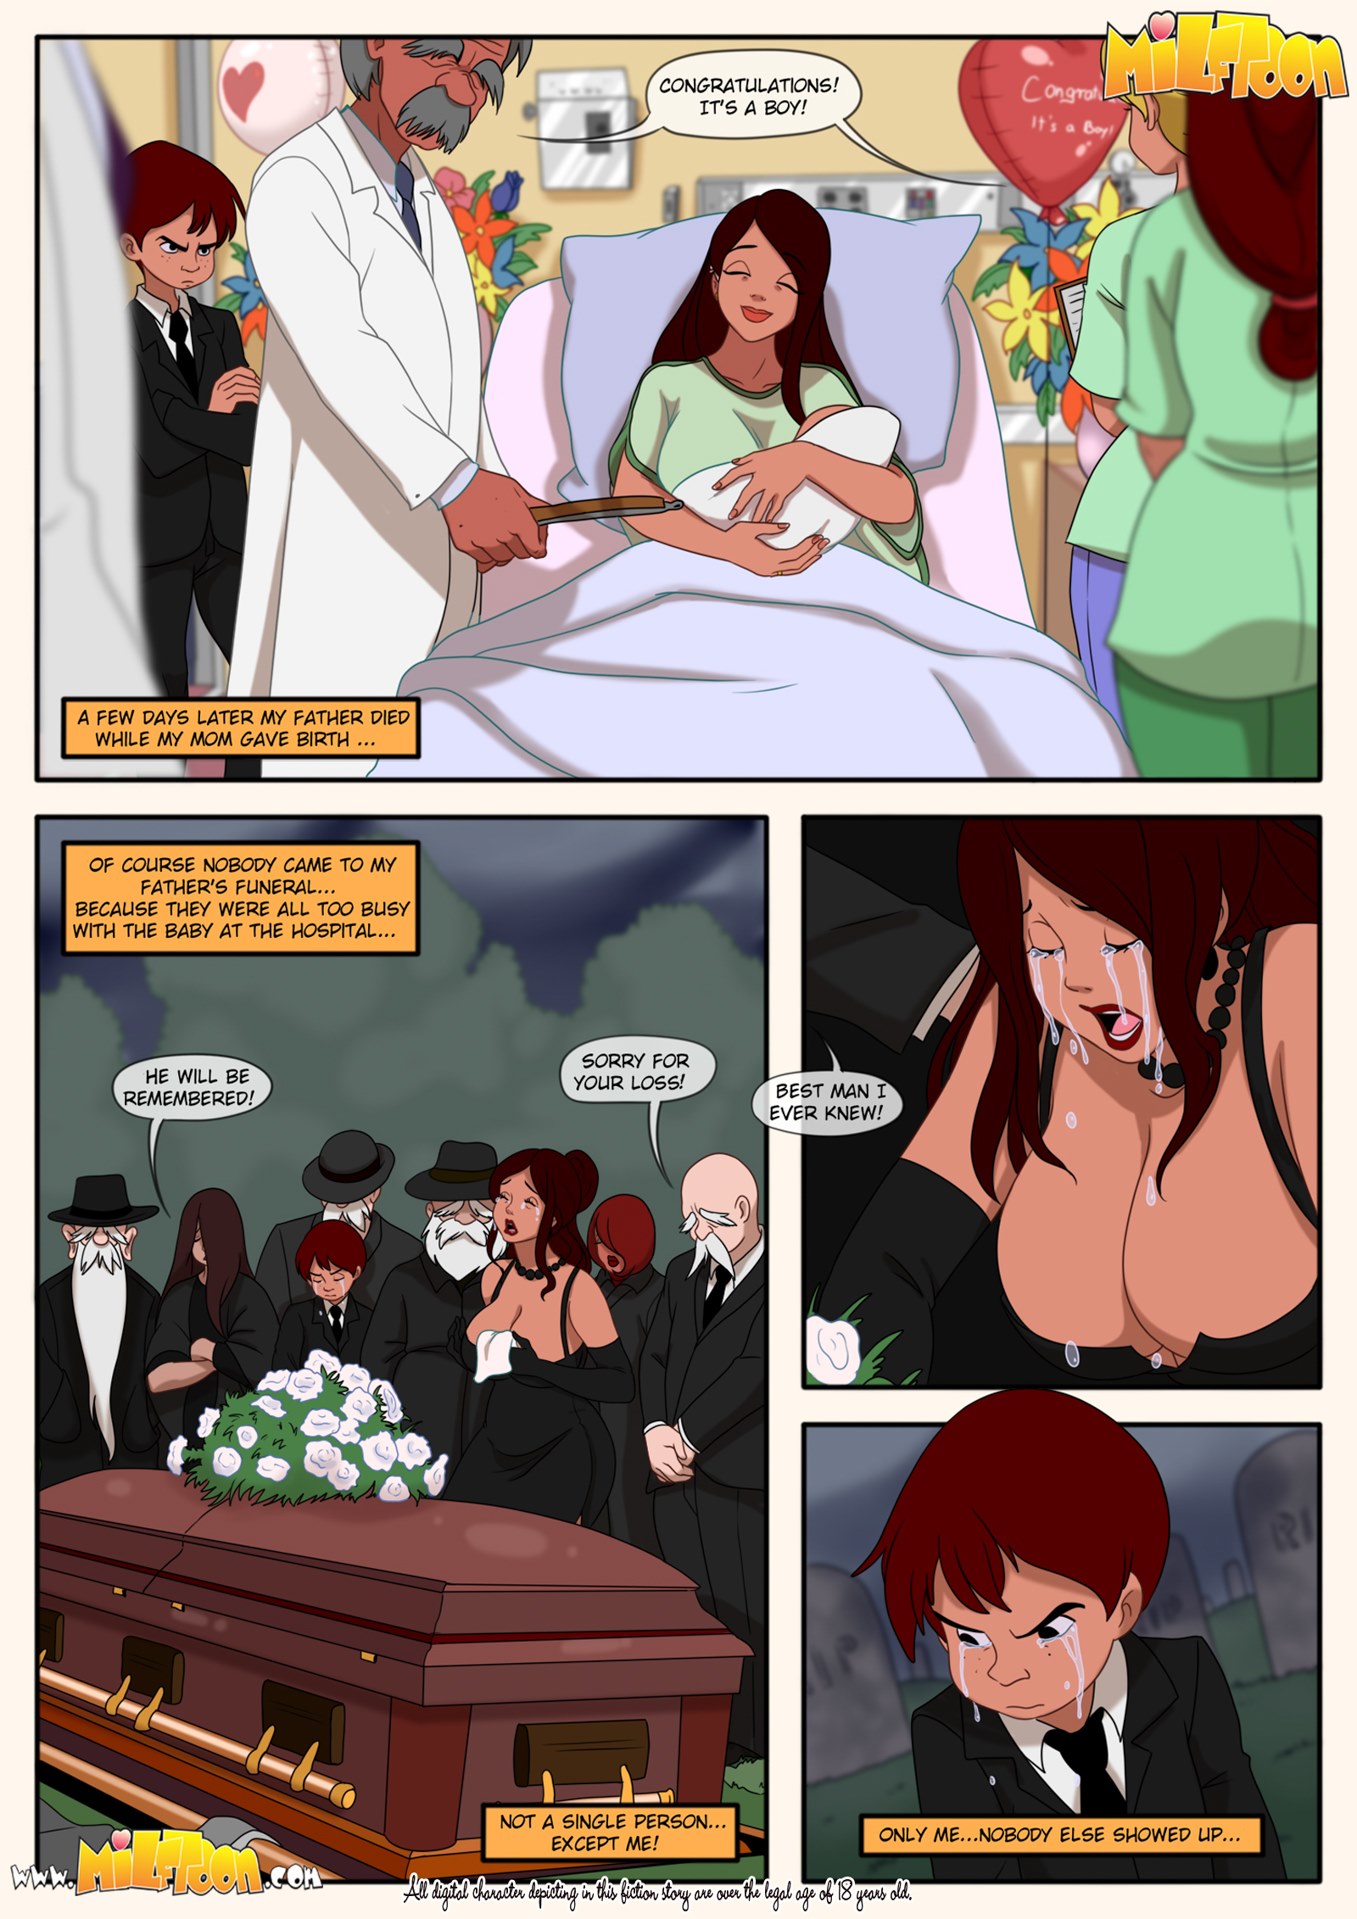 animated married man porn cartoons Sex Pics Hd